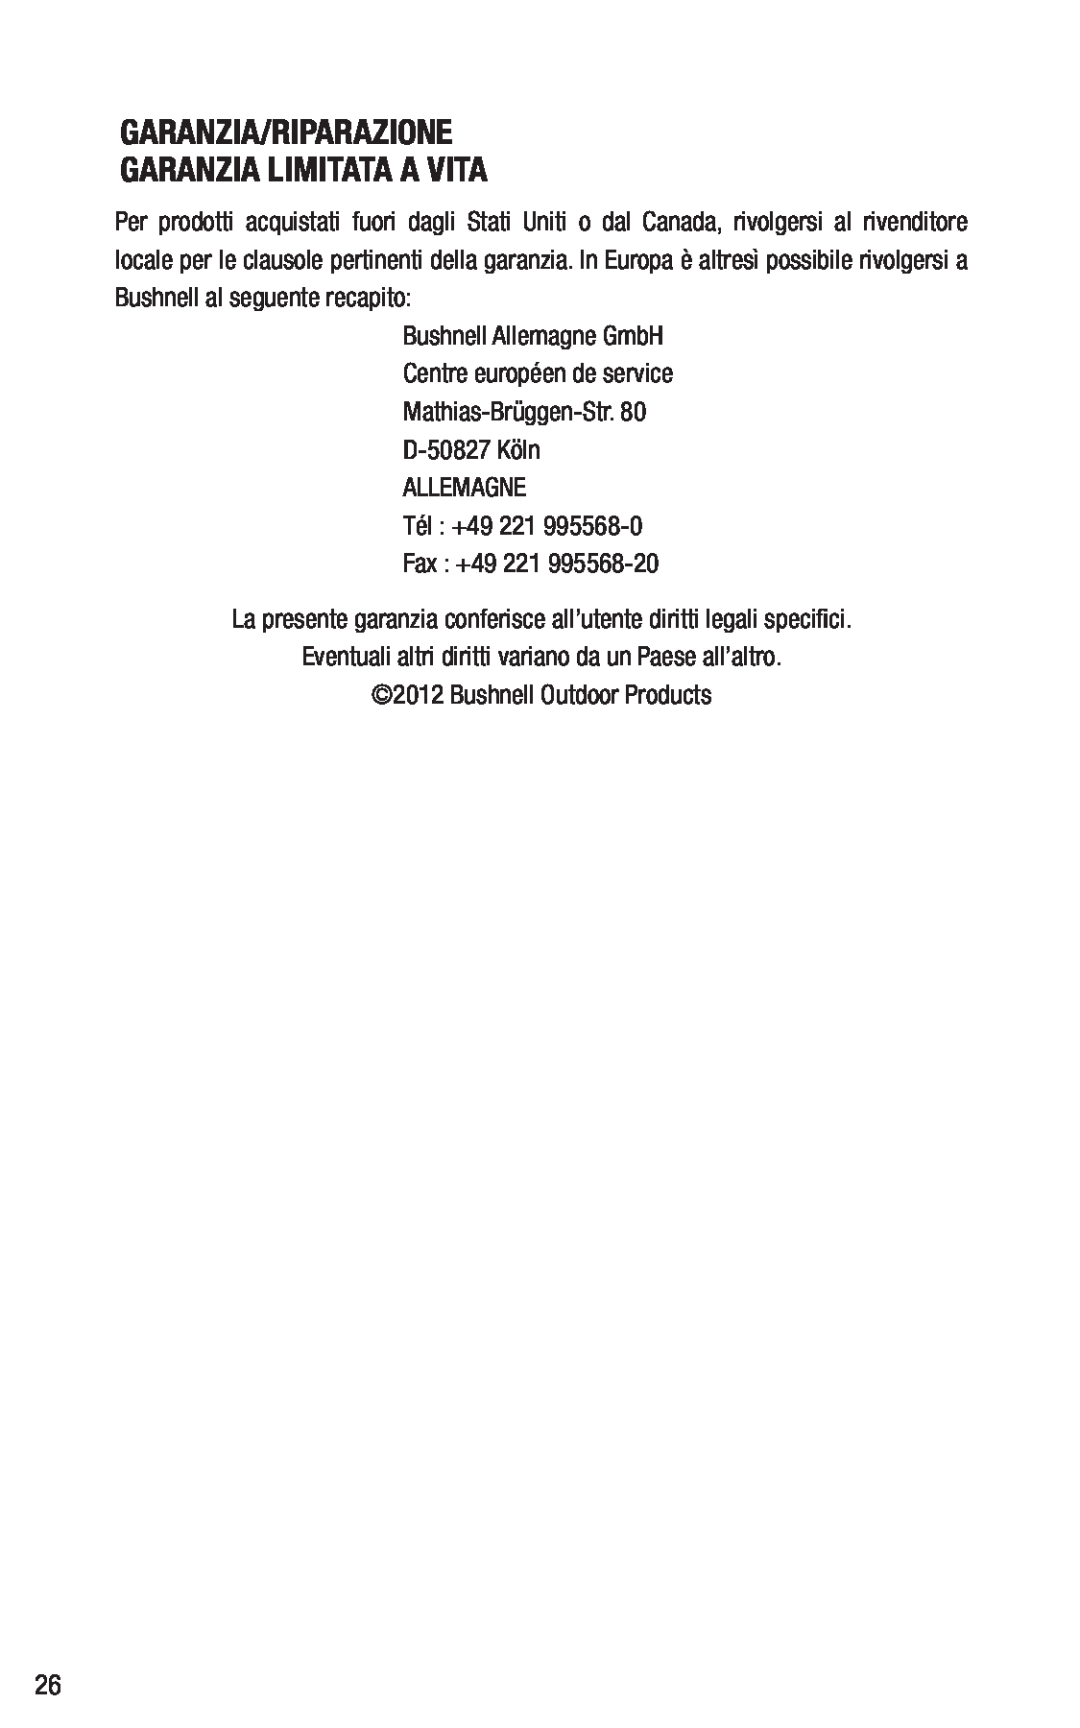 Bushnell 191144 instruction manual ALLEMAGNE Tél +49 221 Fax +49, Garanzia/Riparazione Garanzia Limitata A Vita 